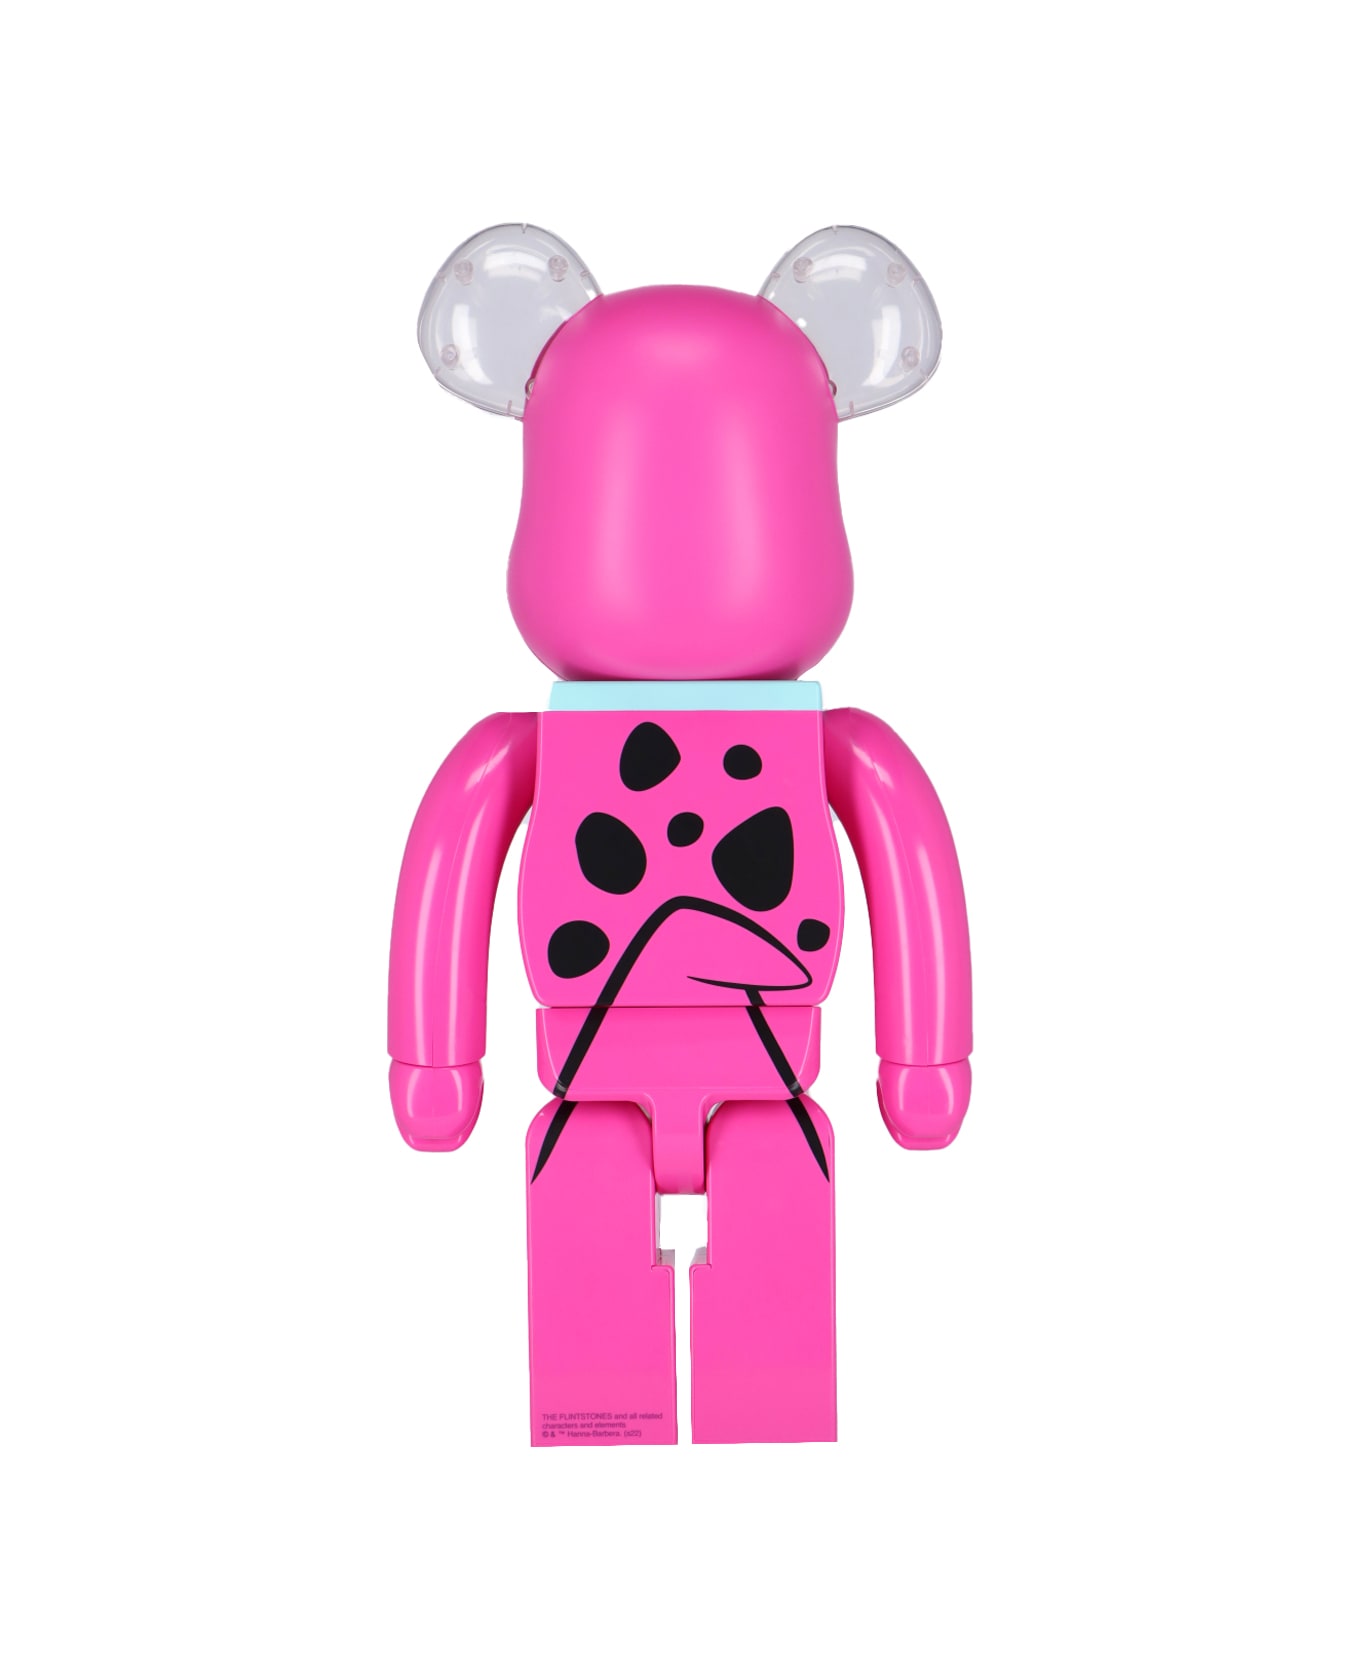 Medicom Toy Accessory - Pink